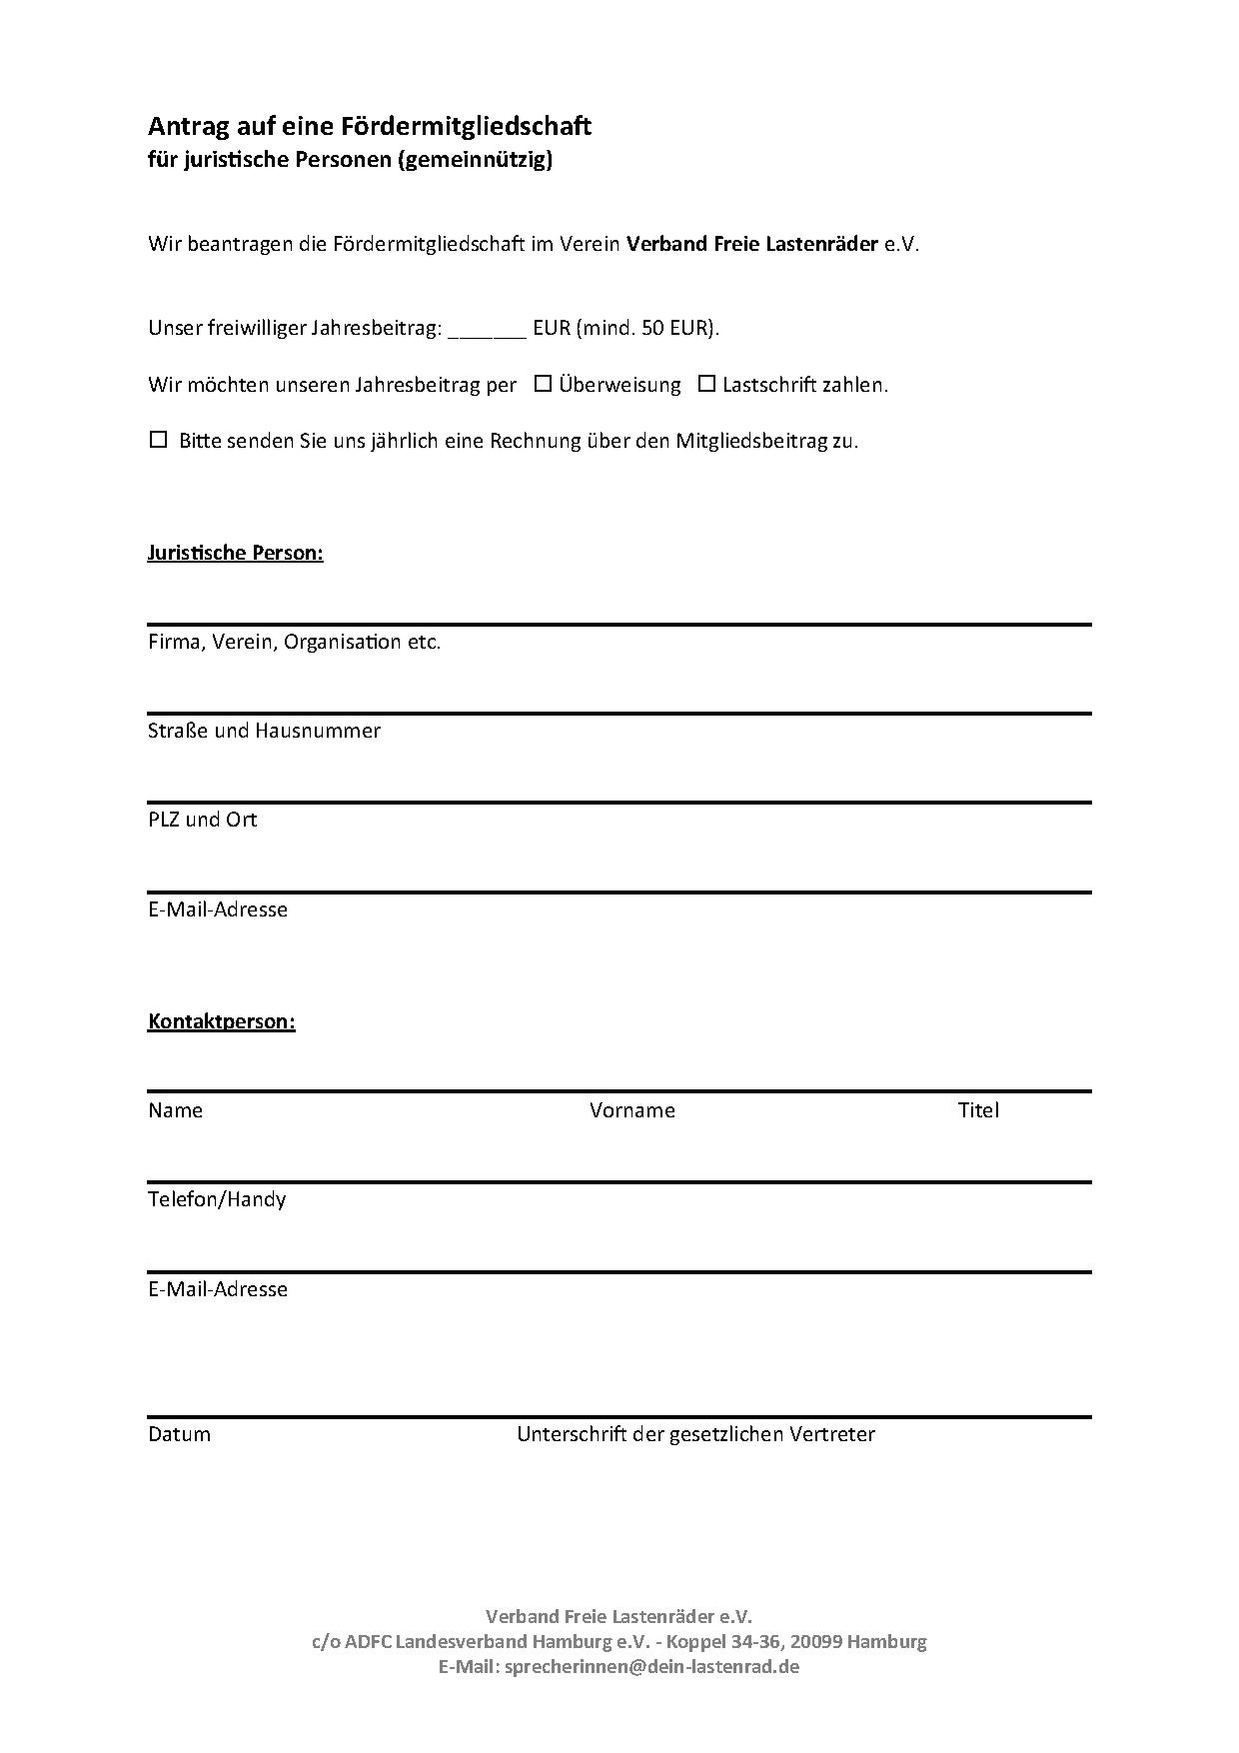 VFL - Antrag Fördermitglied jurPerson (gemeinnützig).pdf